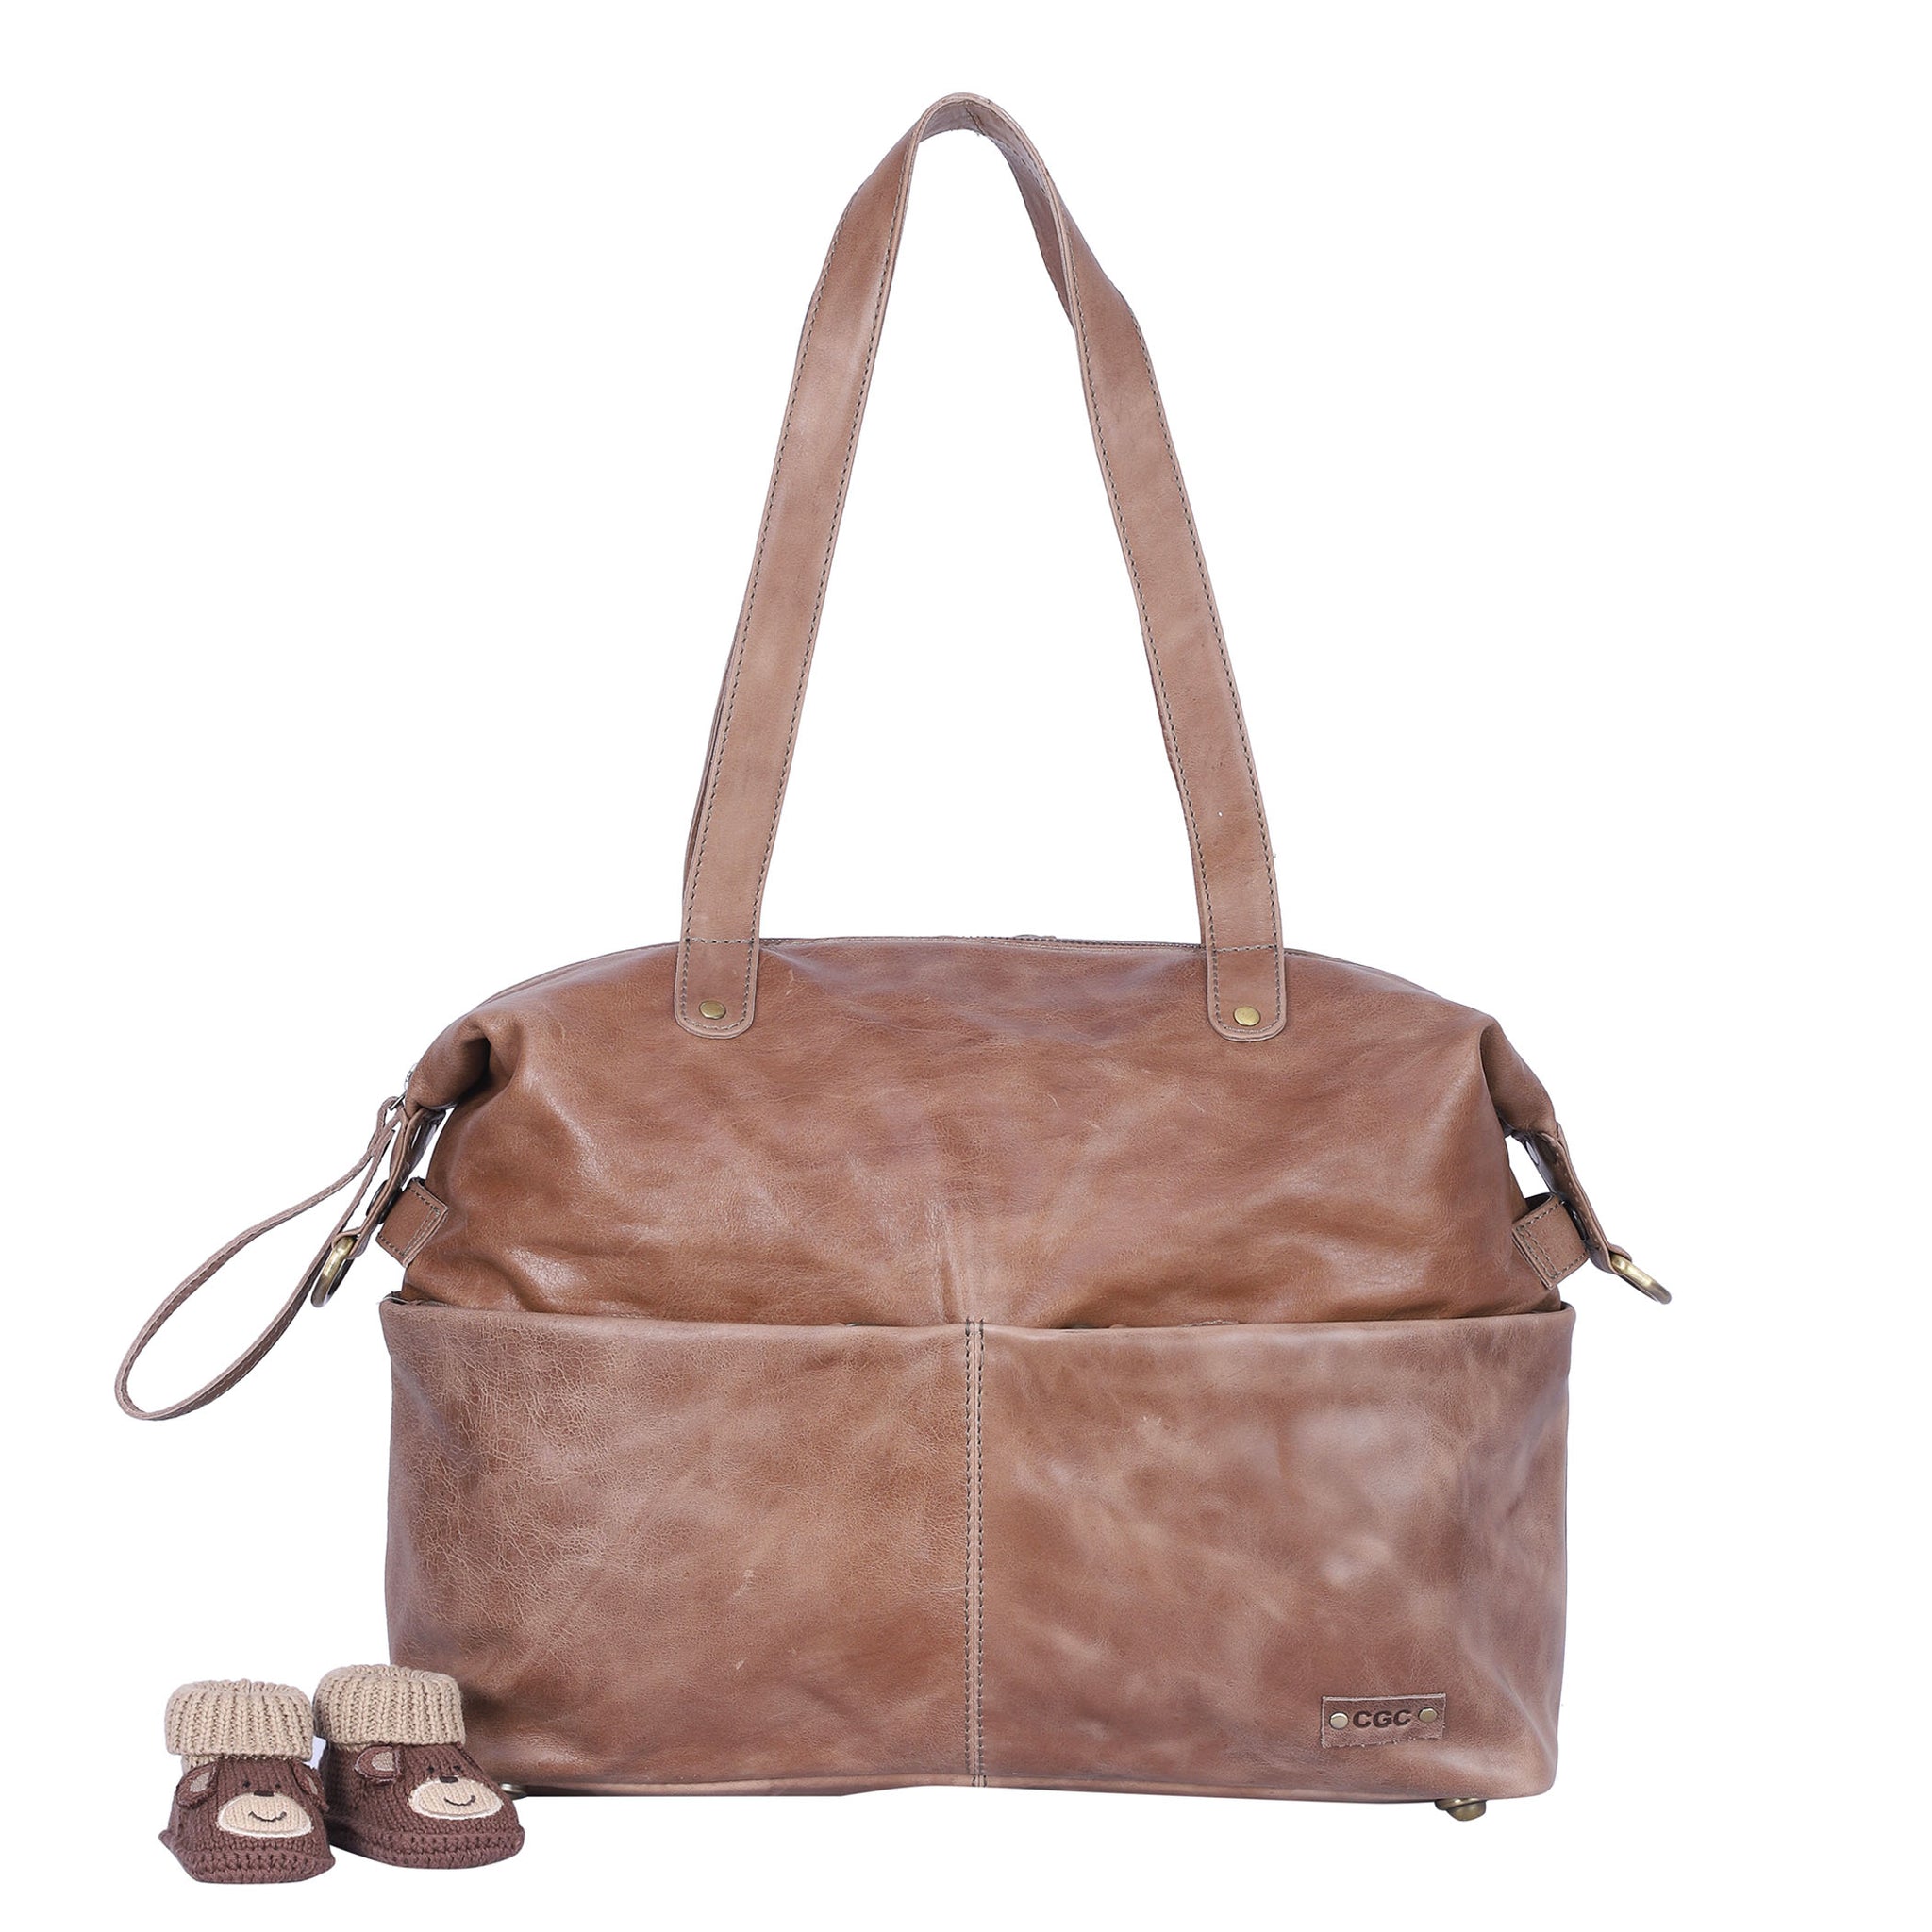 Amazon.com: Leather backpack handwoven purse - kilim Rucksack Hippie Style  for women - Hipster handbag - hobo bag - Adjustable straps (Dark  Almond/Brown) : Handmade Products